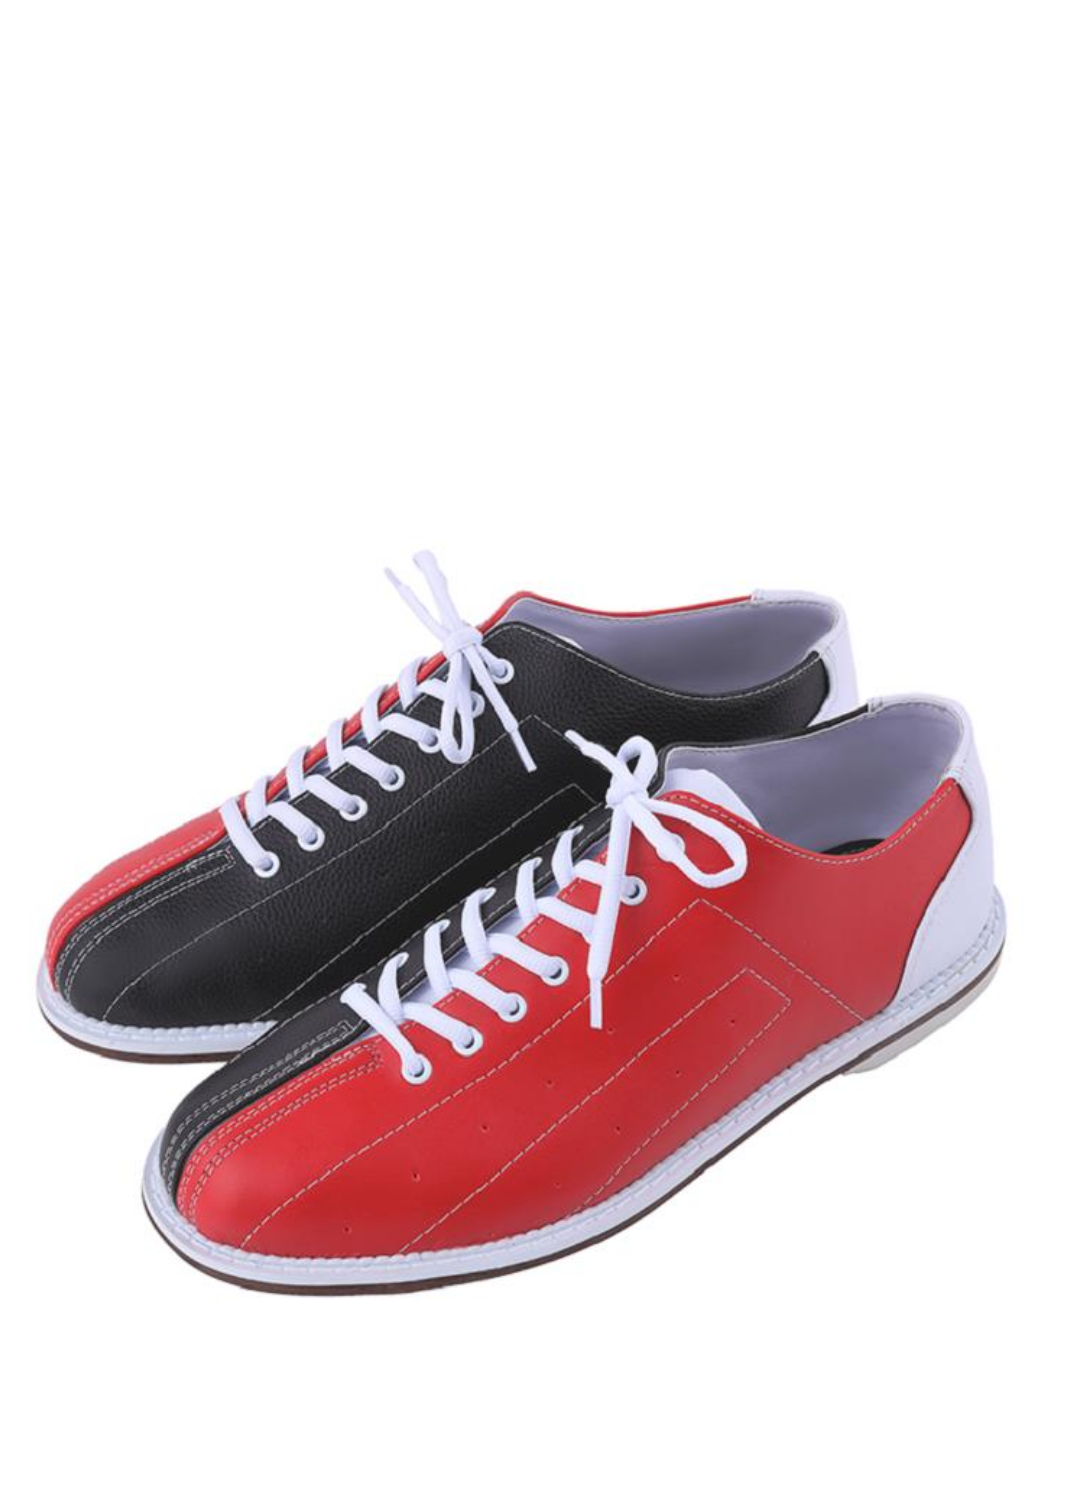 Skipper Men's Bowling Shoes | Ultrasellershoes.com – Ultra Seller Shoes